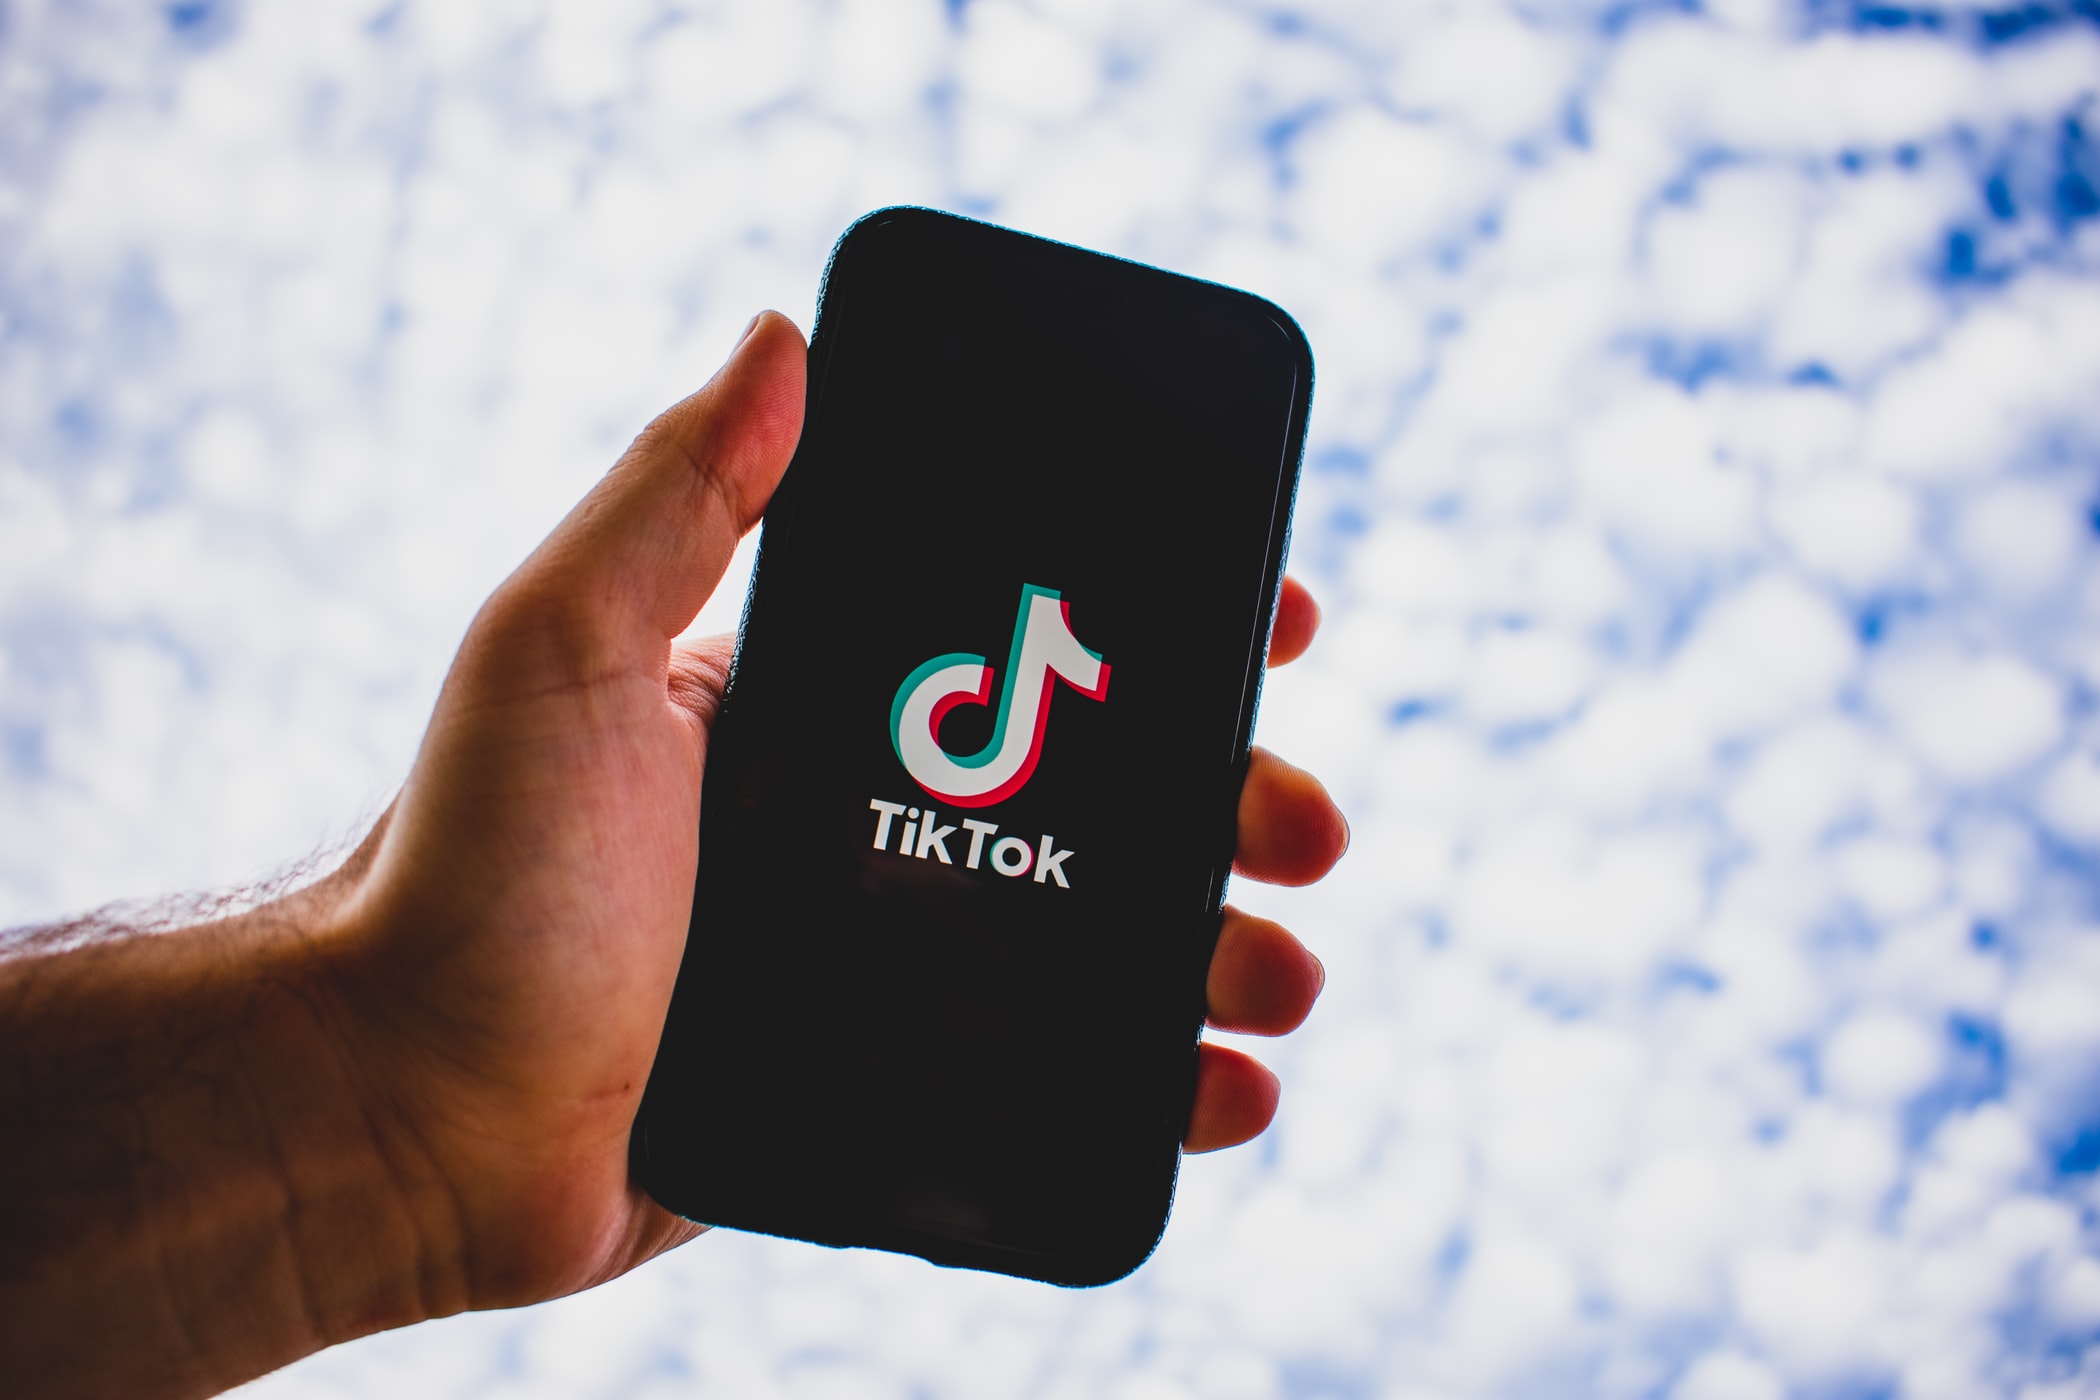 Kiếm tiền từ TikTok có dễ?